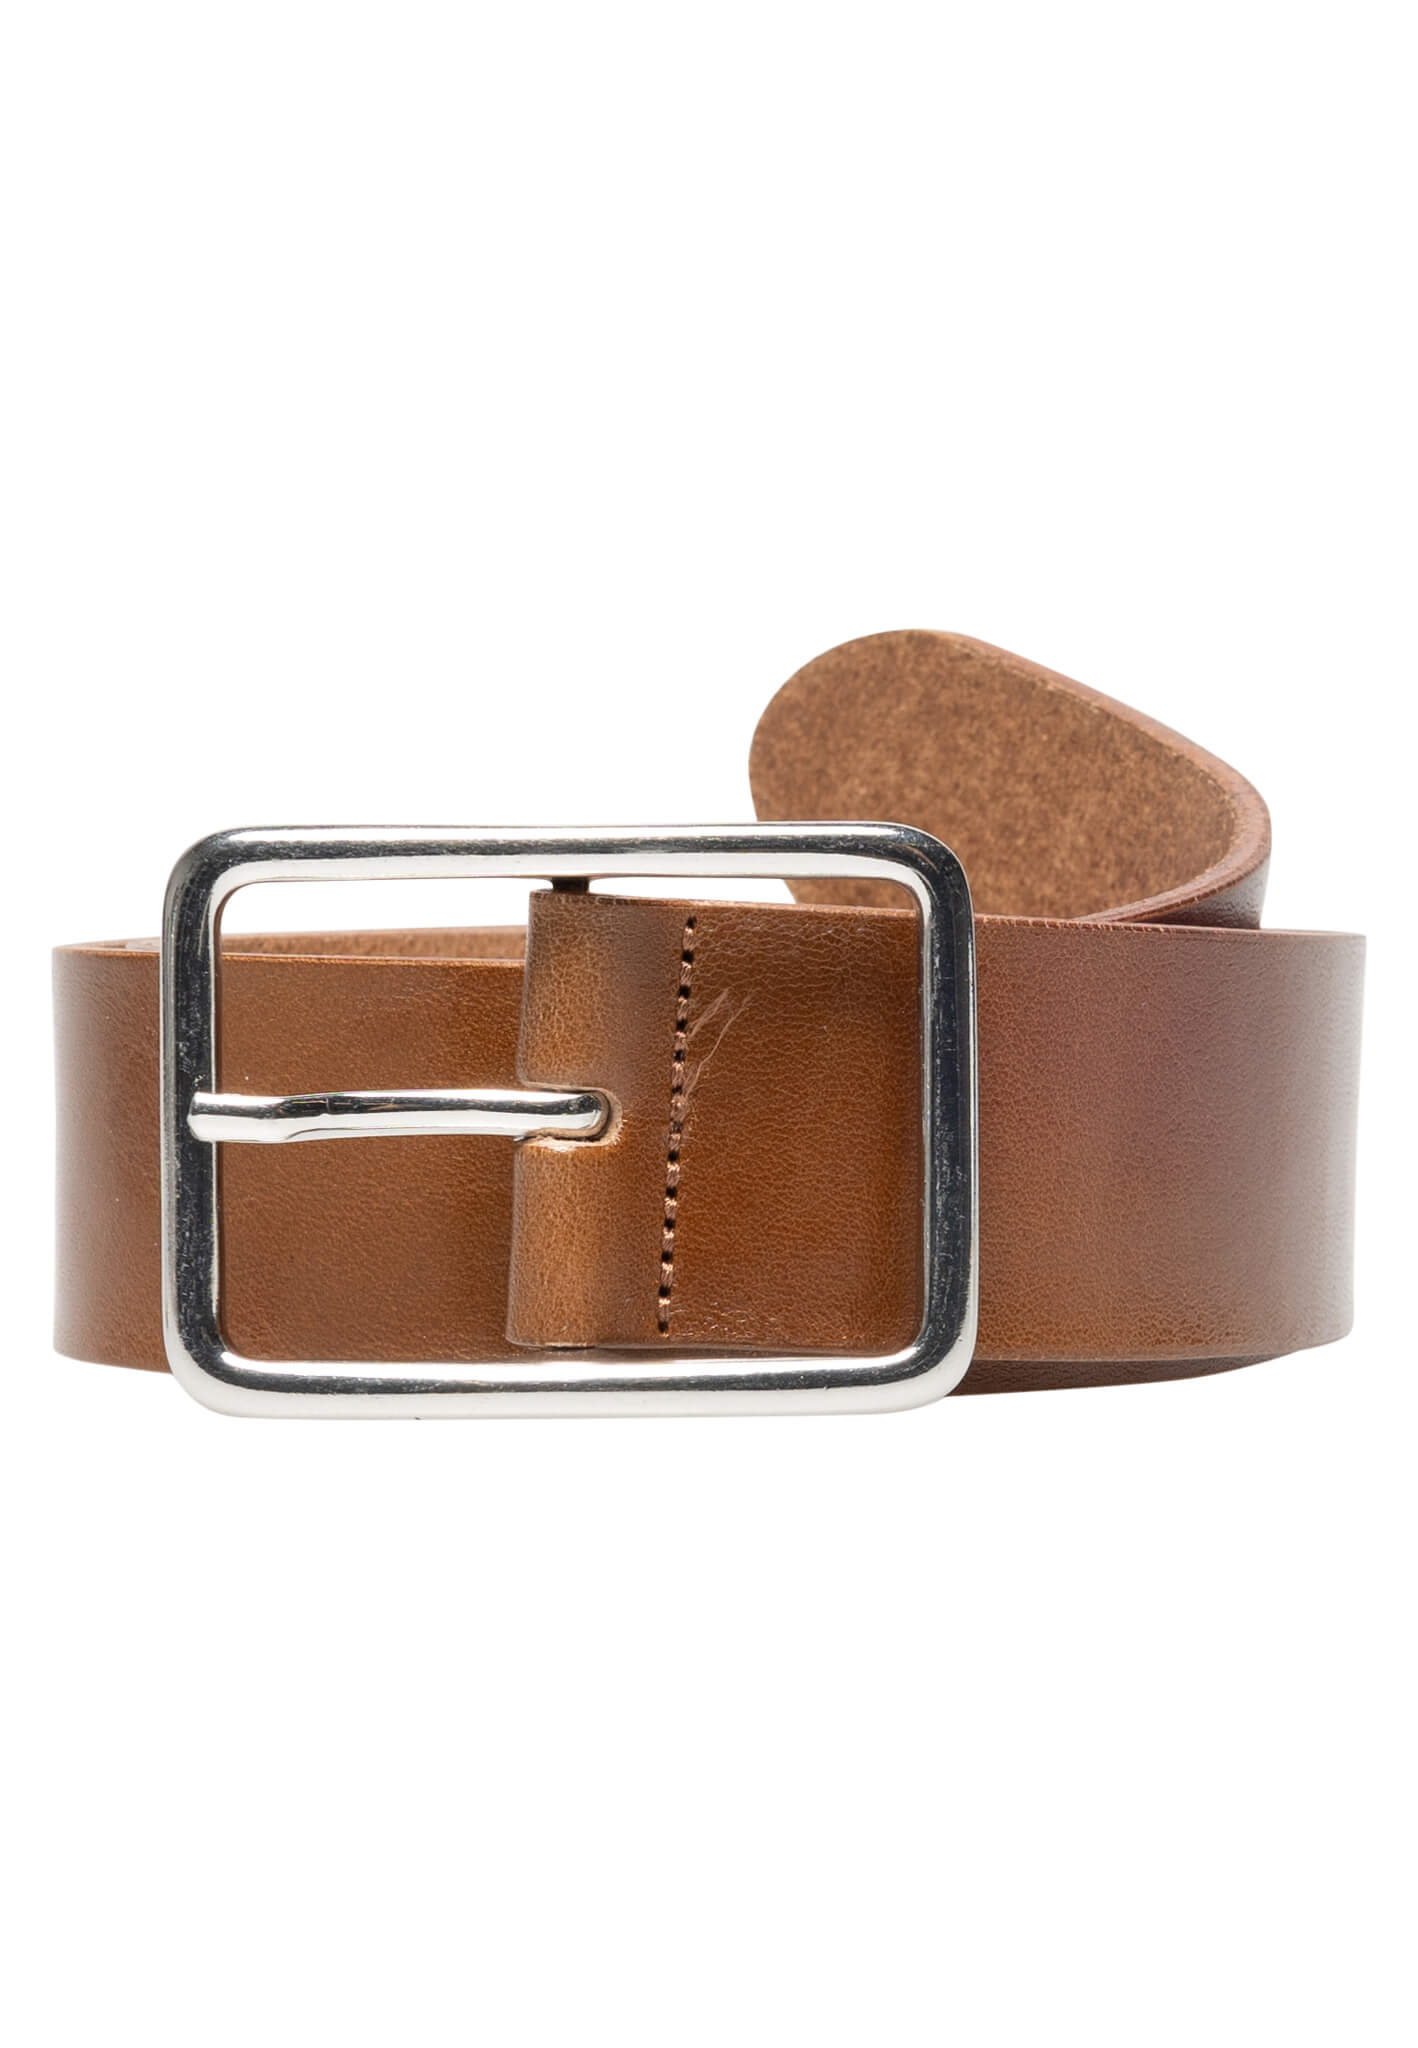 Shop FYNCH-HATTON belt Full FYNCH-HATTON | Offizieller – Online leather